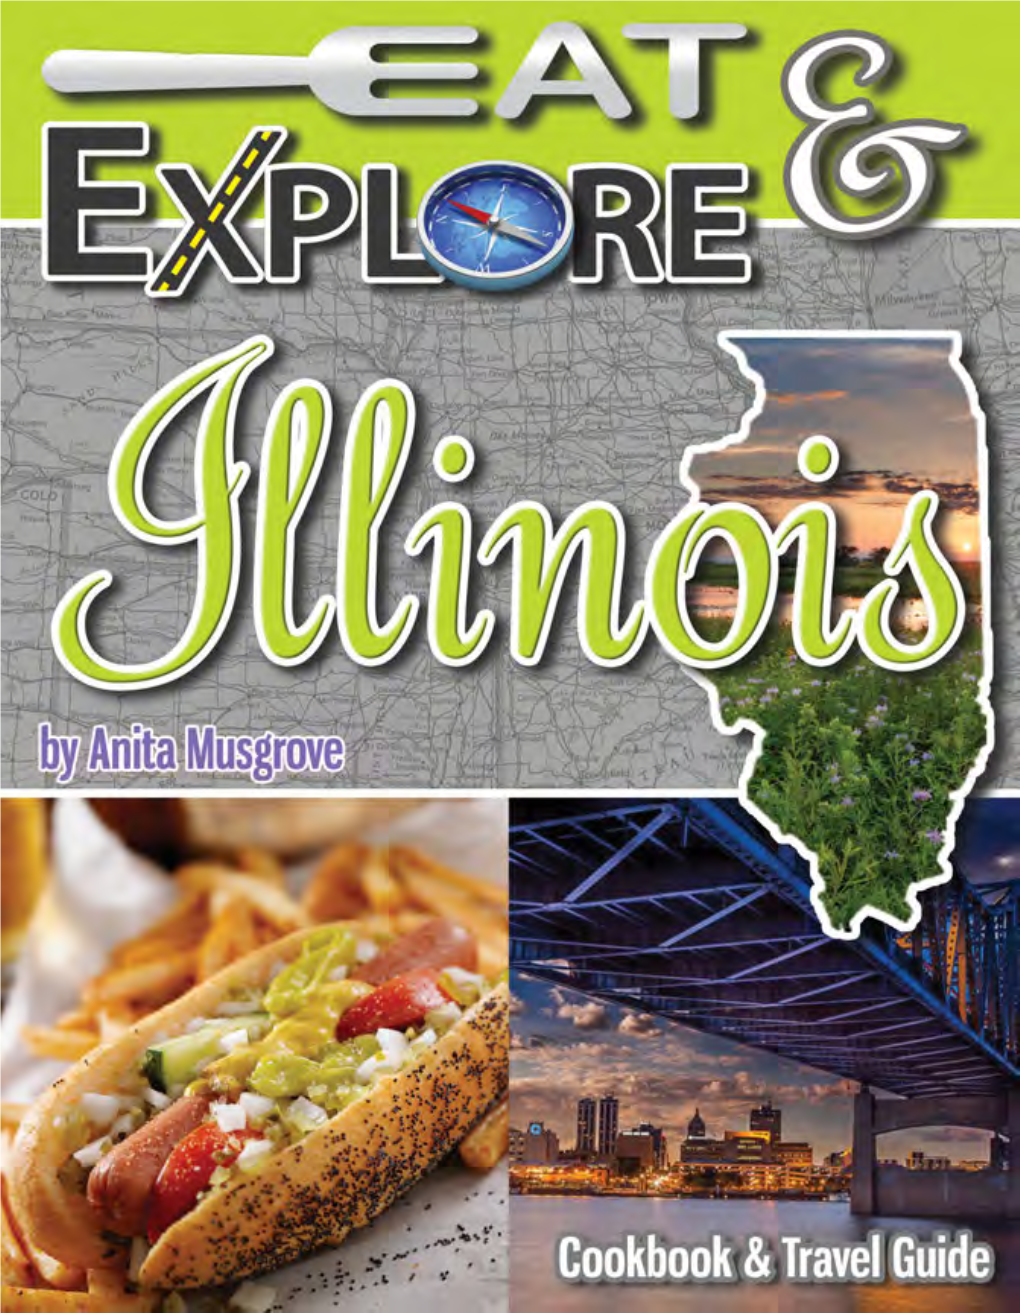 Eat & Explore Illinois Cookbook & Travel Guide